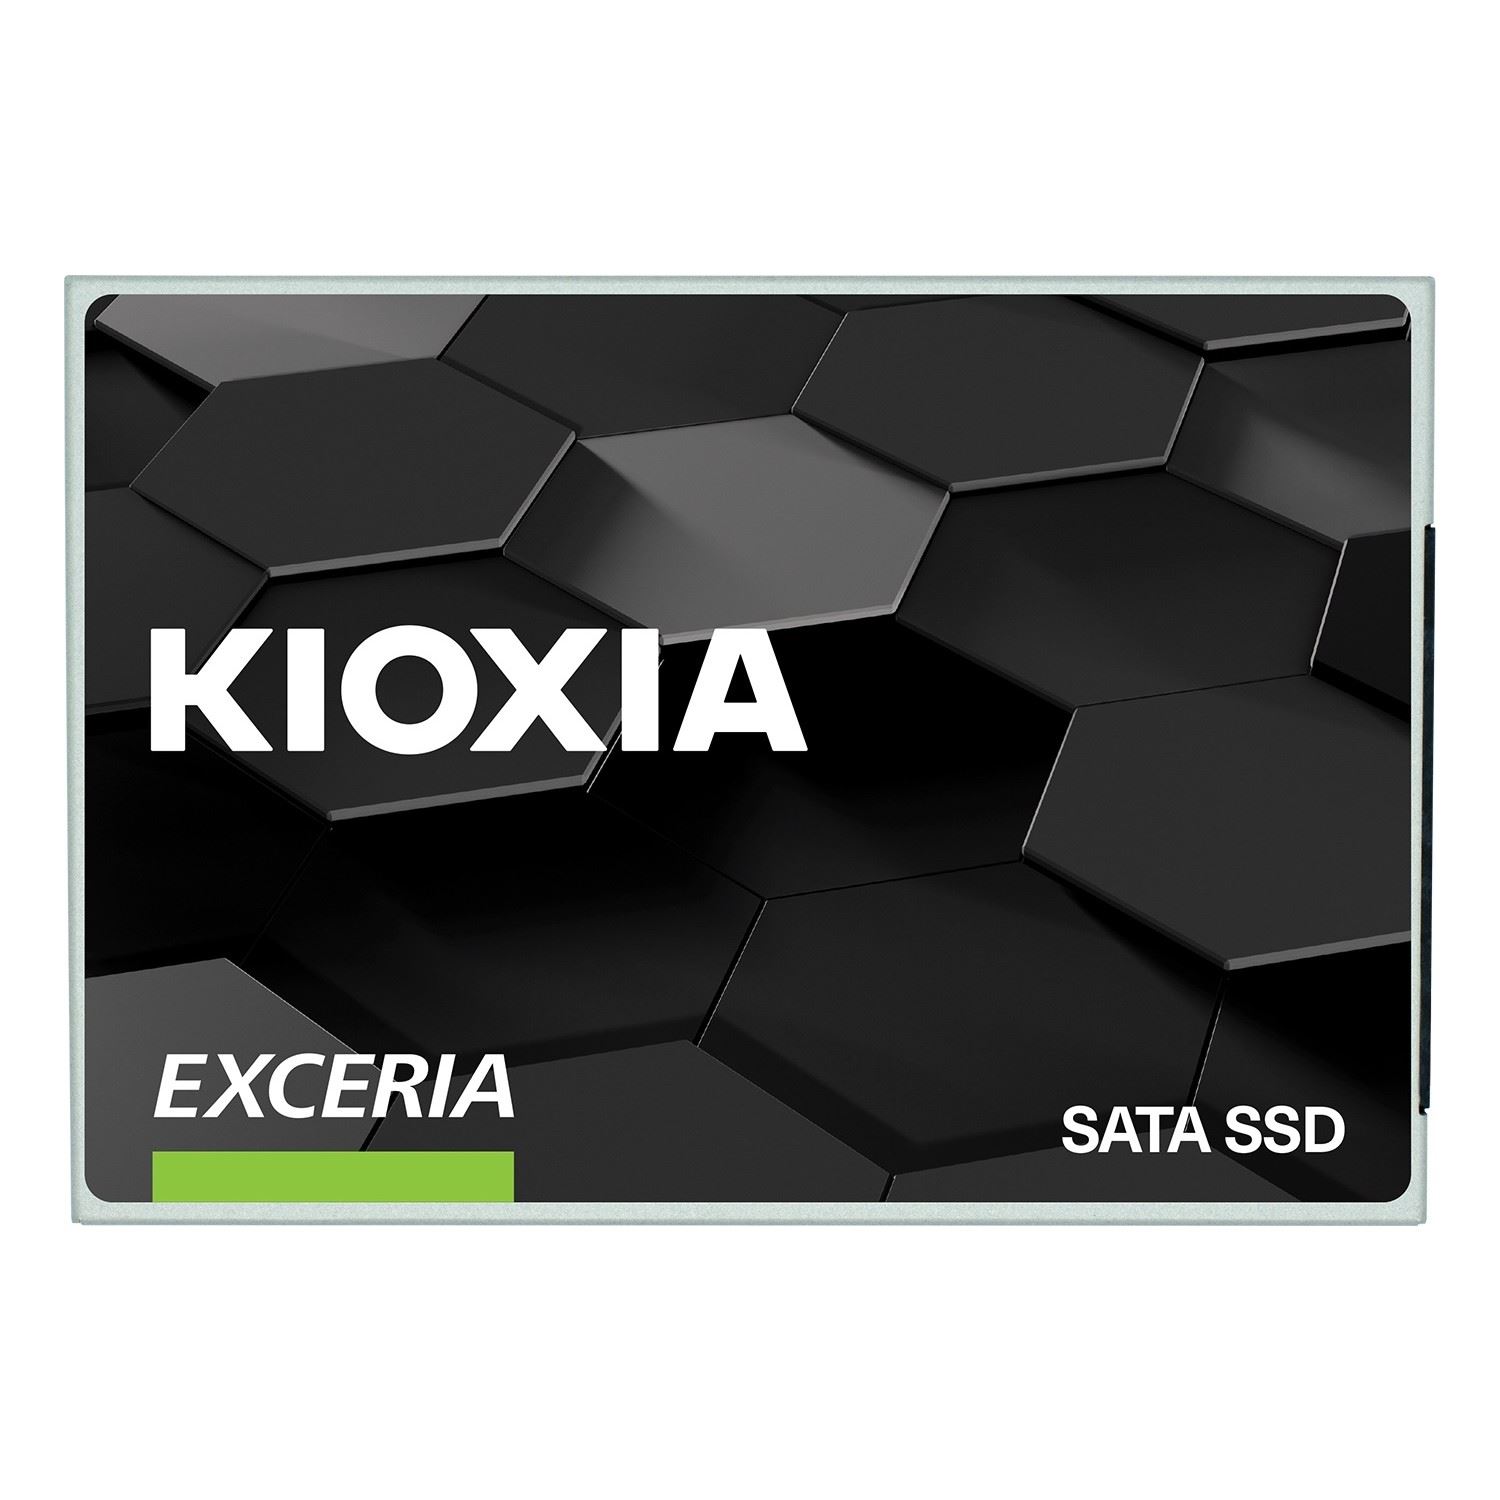  Kioxia 240 GB Exceria